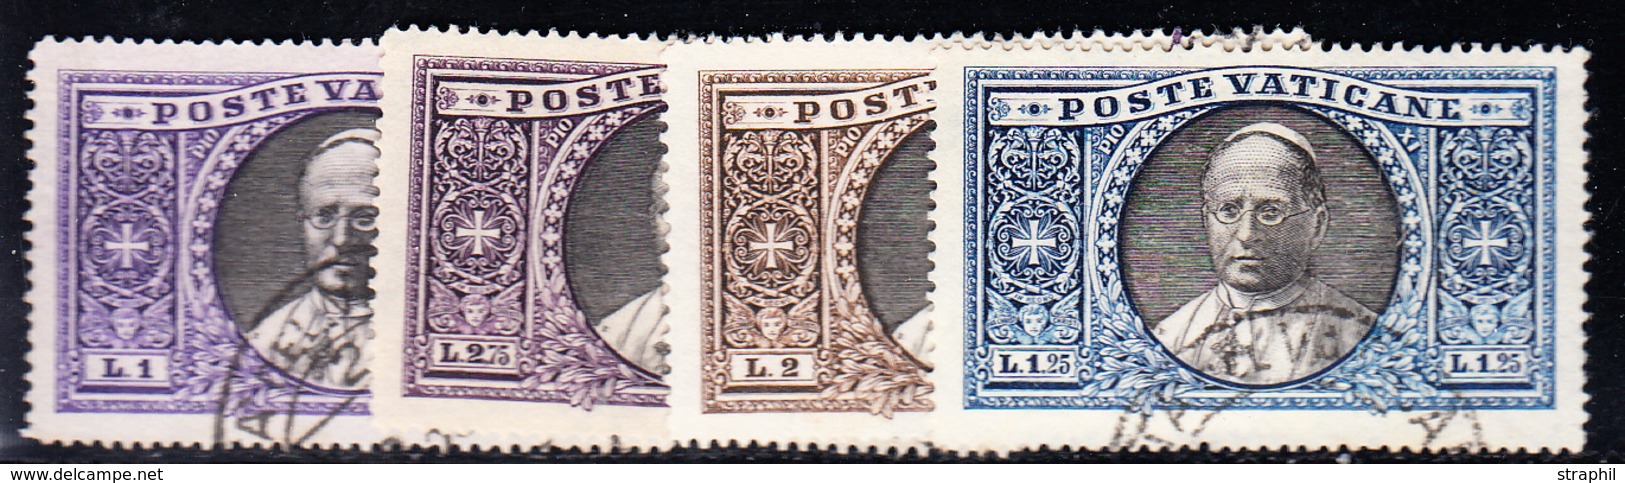 O N°53/56 - TB - Unused Stamps